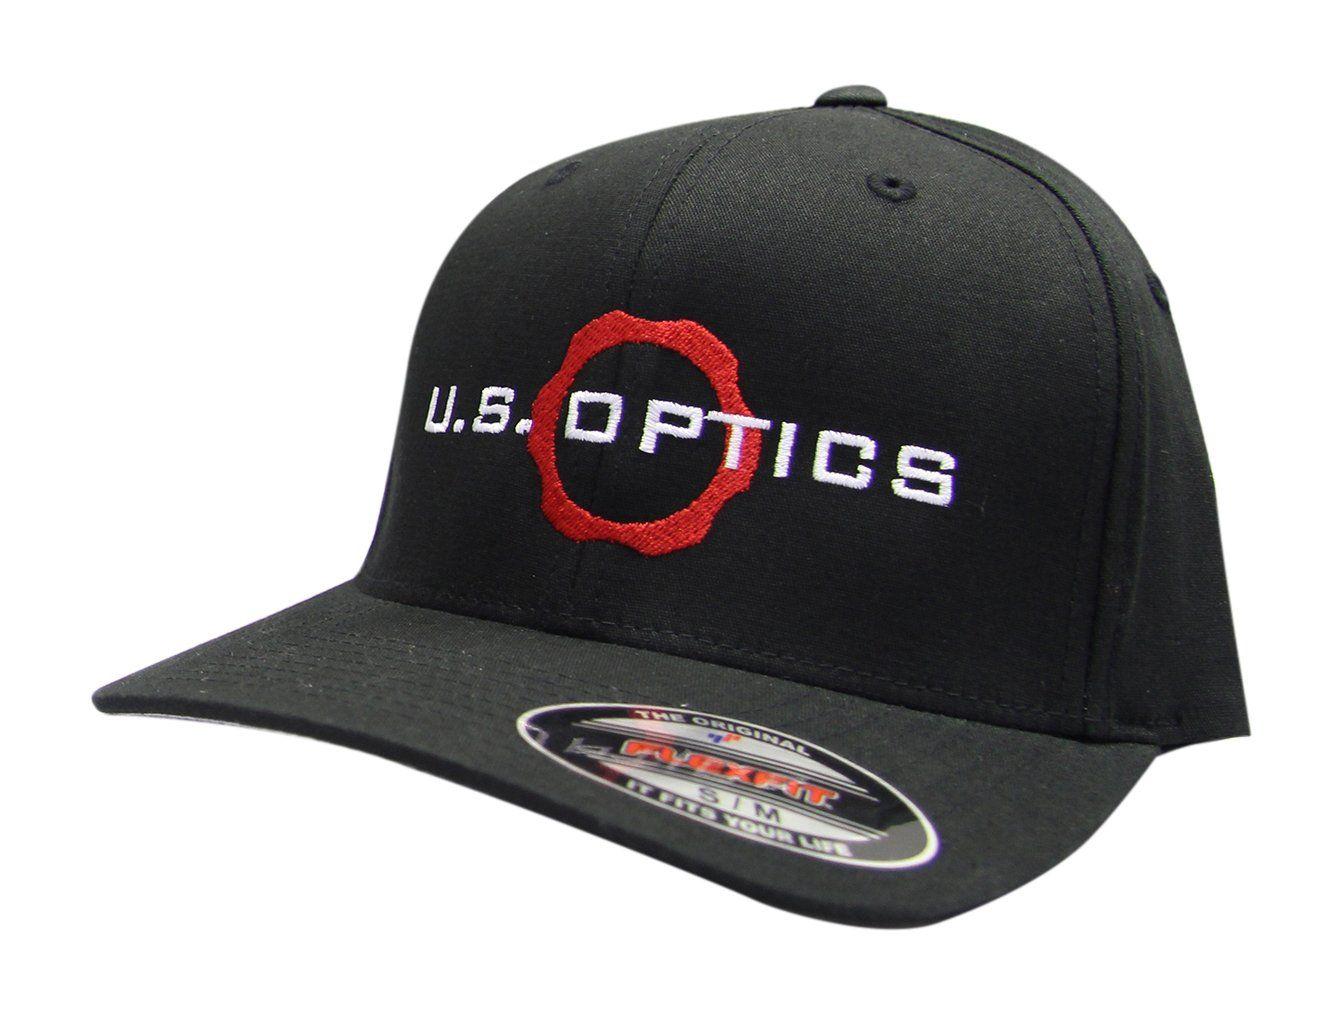 US Optics Logo - US Optics Men's Classic Hat, Black, Large X Large